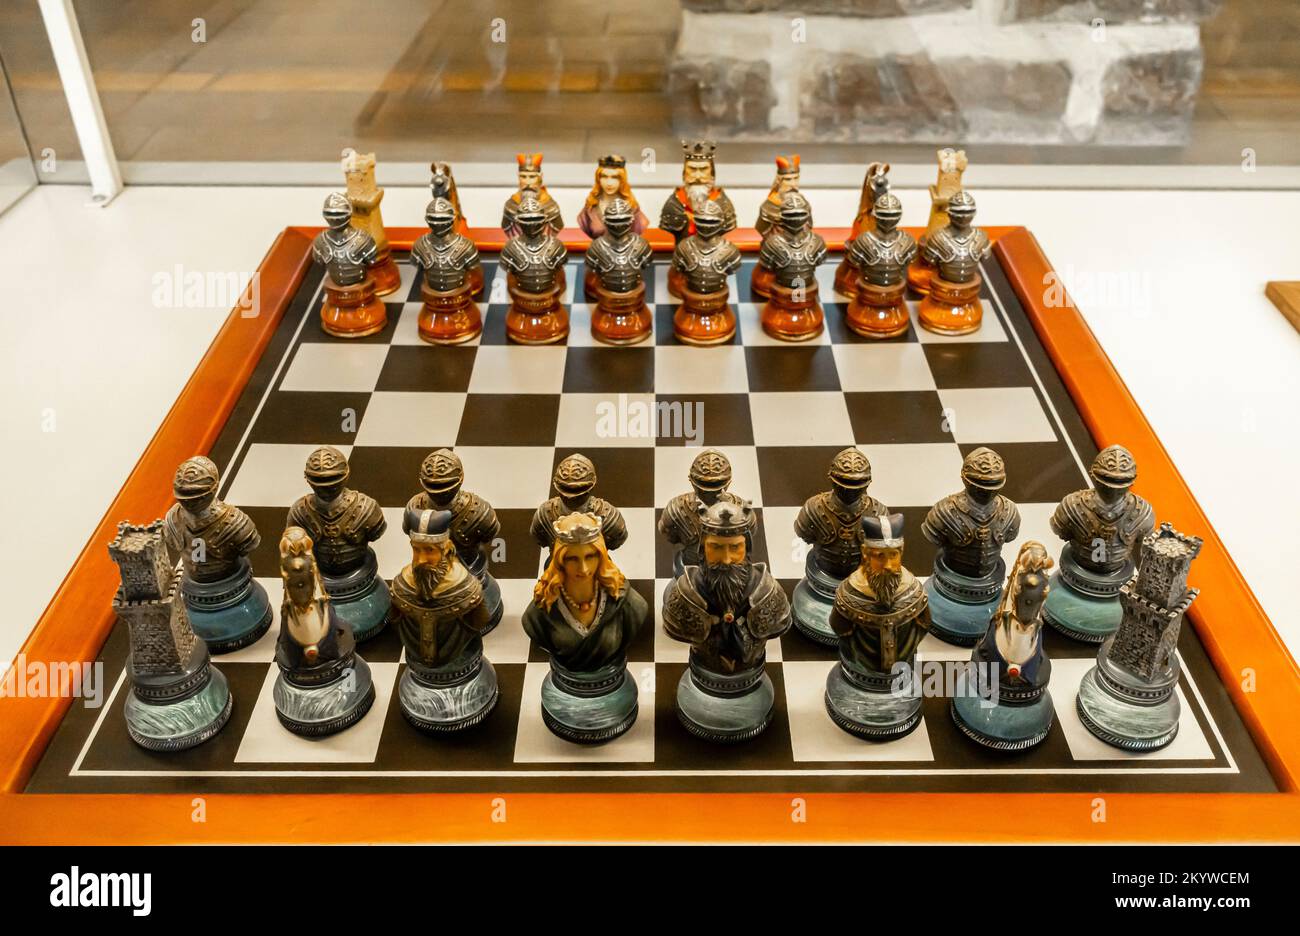 Karpov Chess Club - Karachi